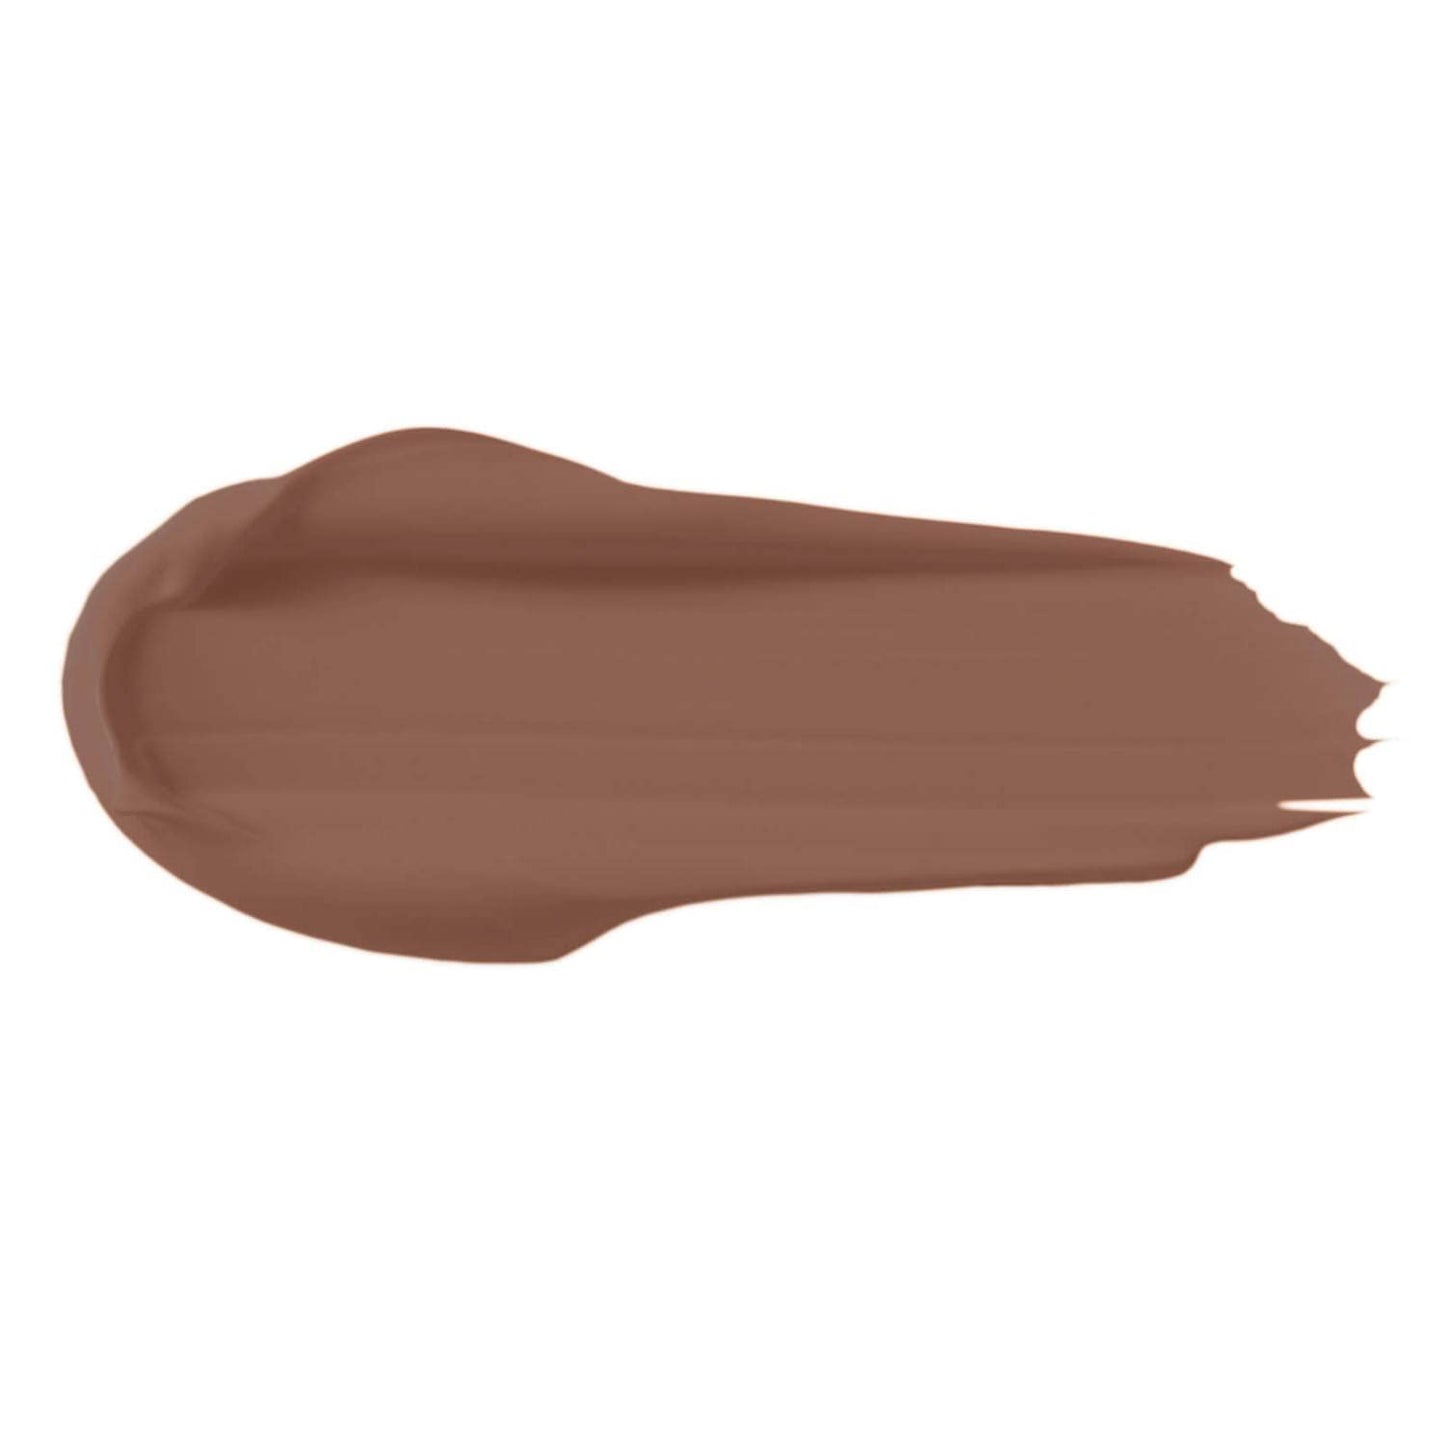 Too Faced Melted Chocolate Liquid Matte Eyeshadow | Warm & Fudgy